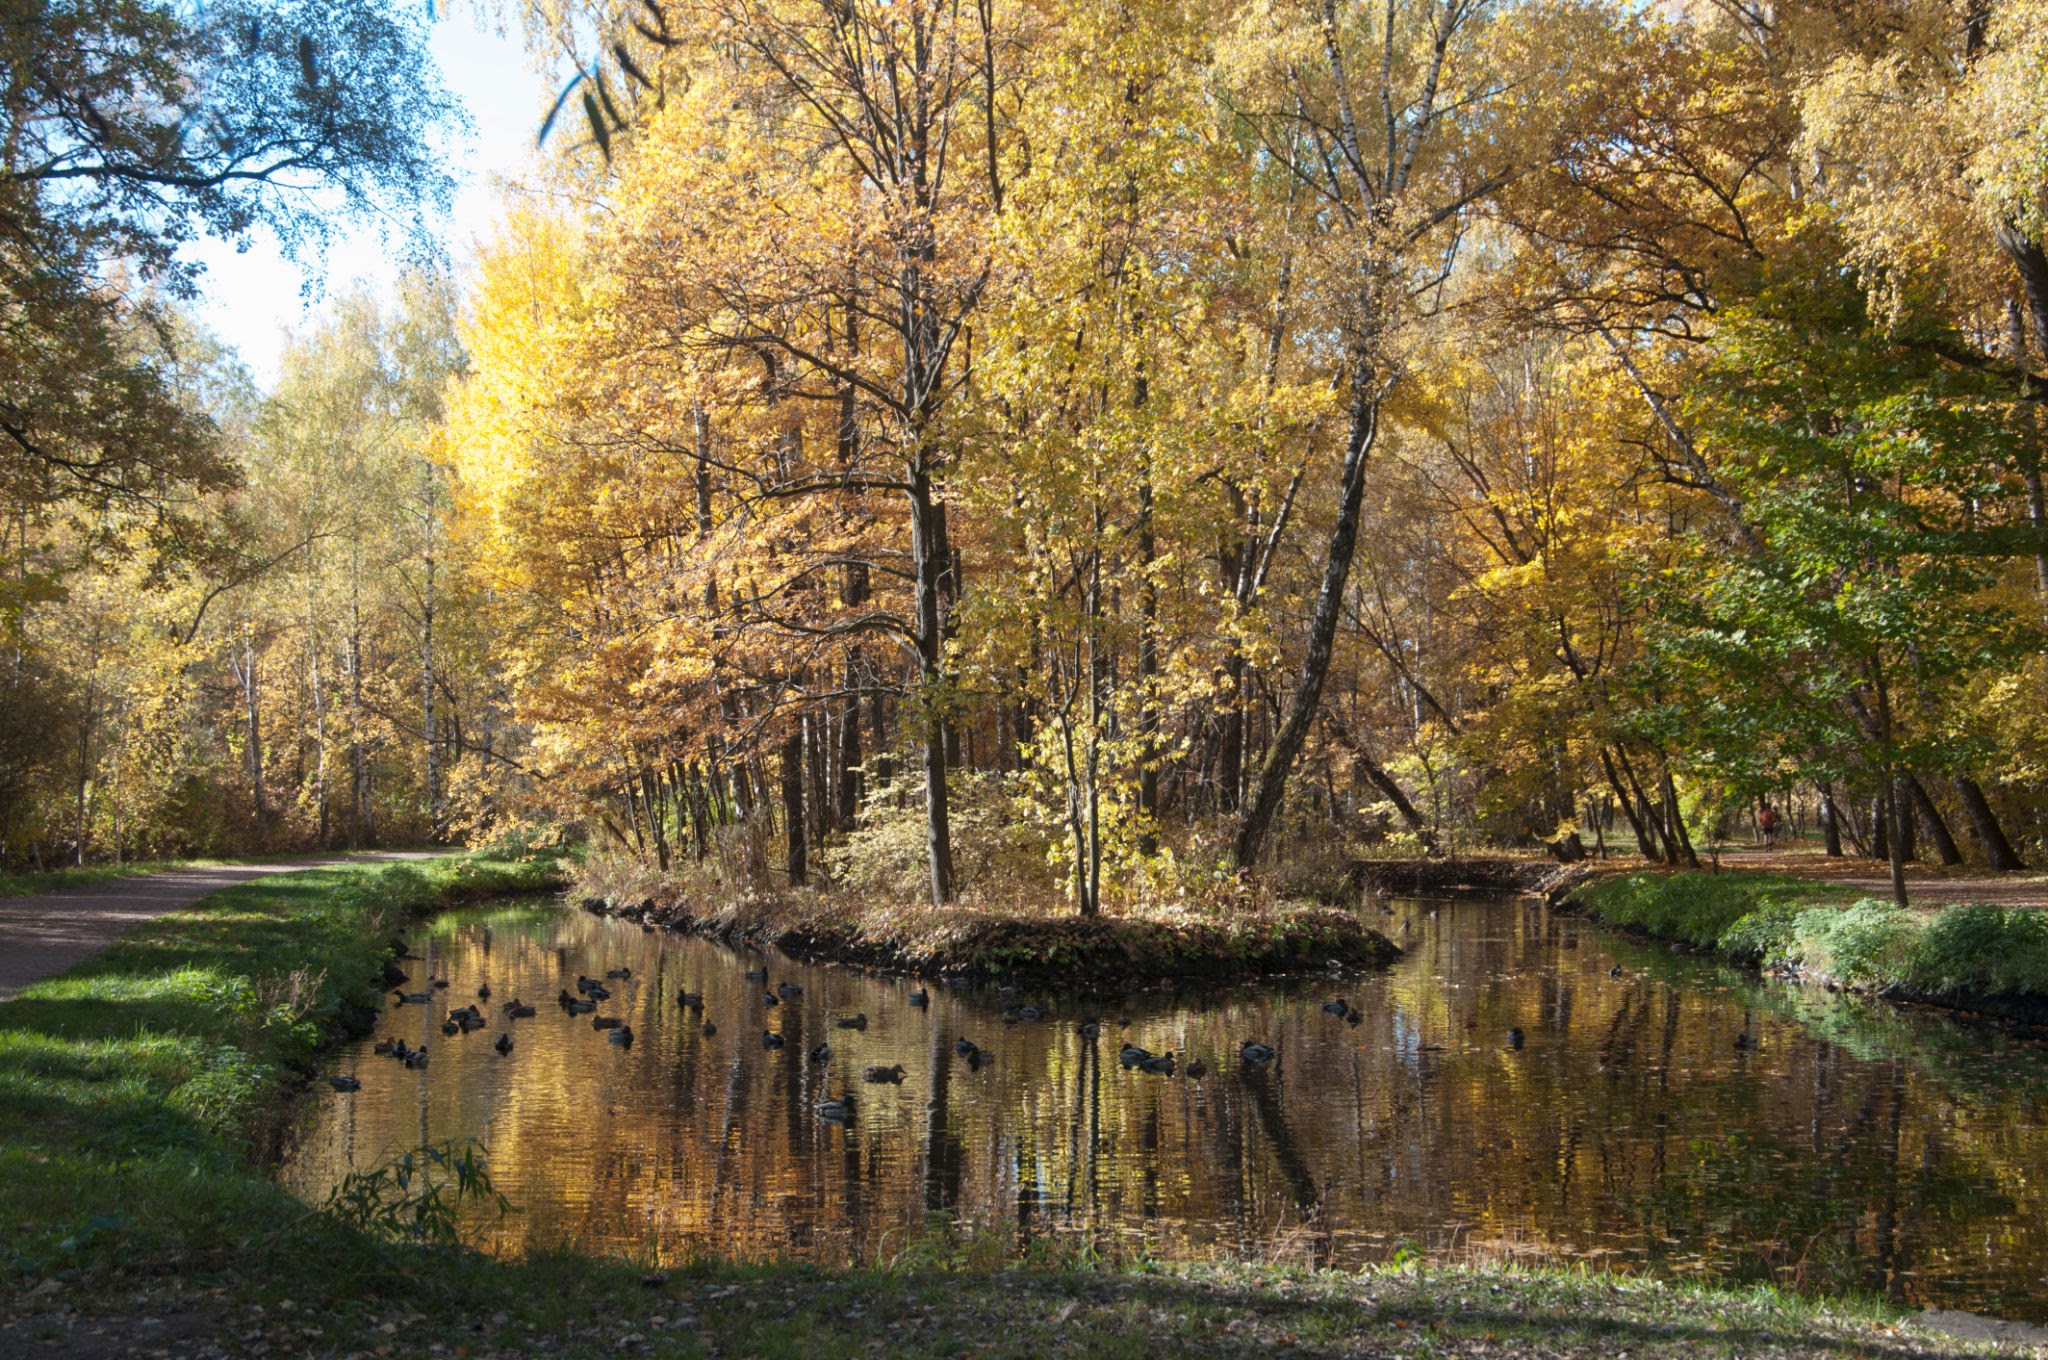 Sokolniki Park